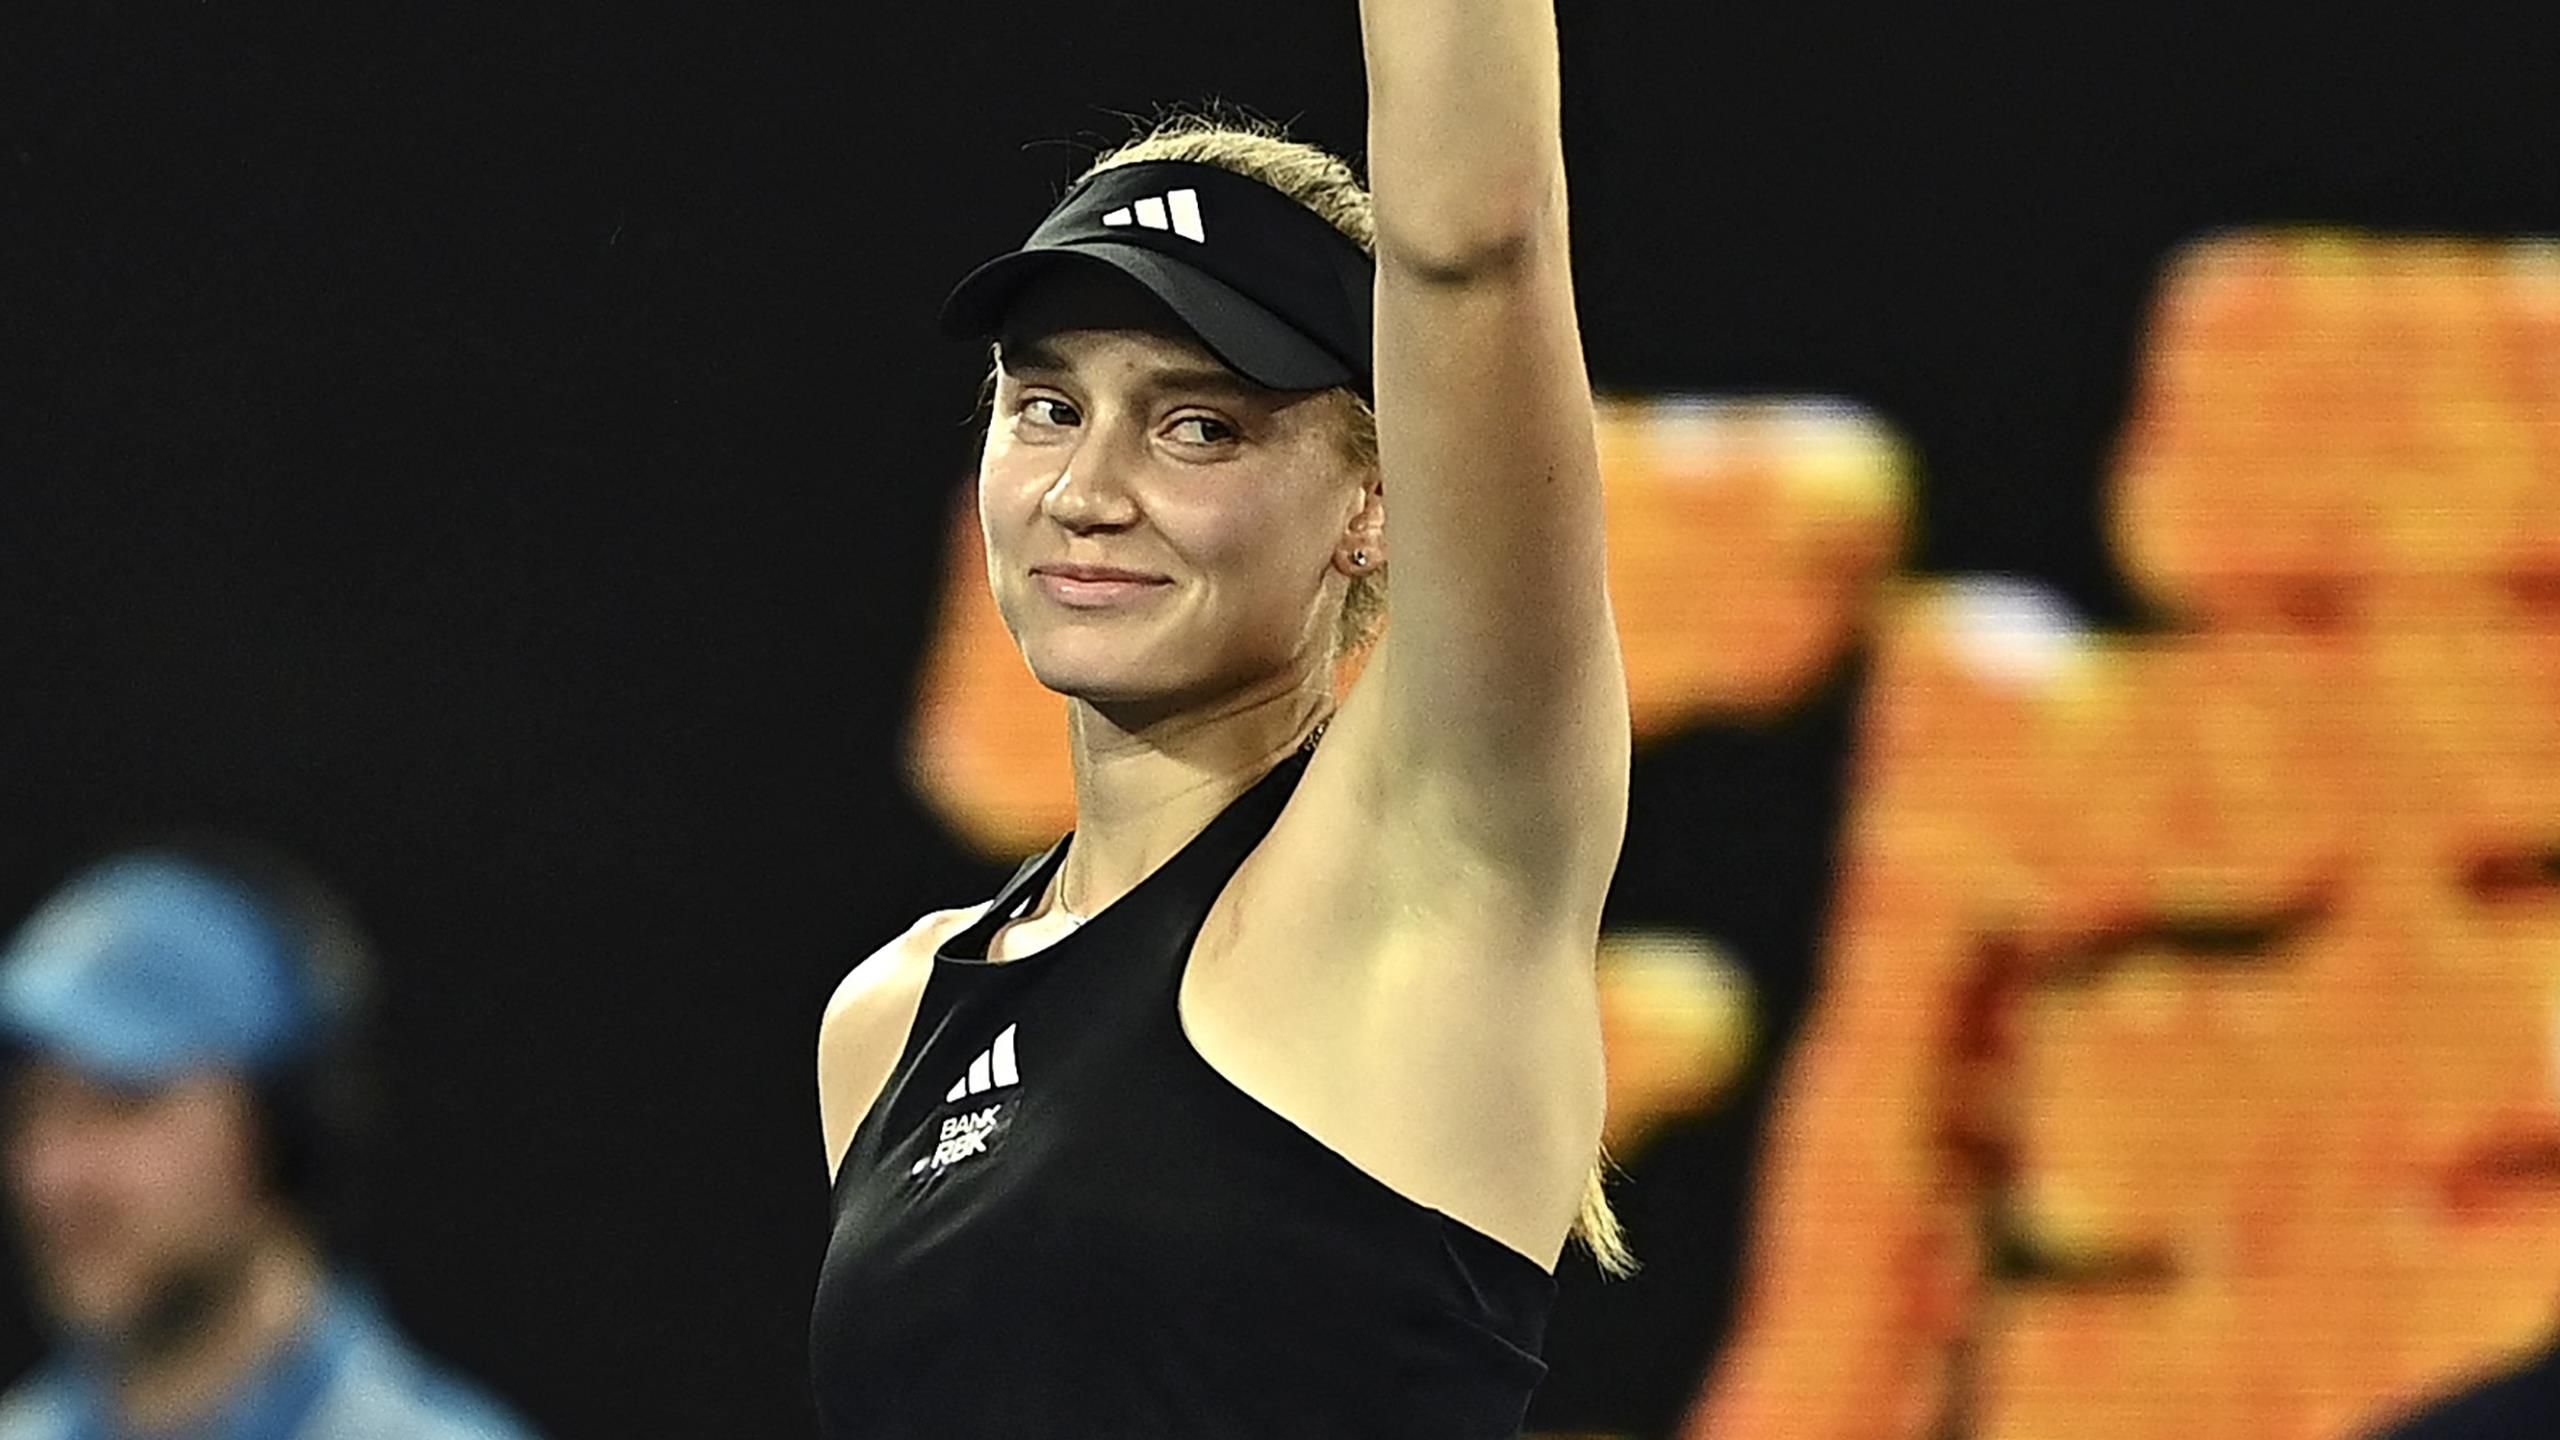 Elena Rybakina predicted to make 10 Grand Slam finals by Mats Wilander after Australian Open run